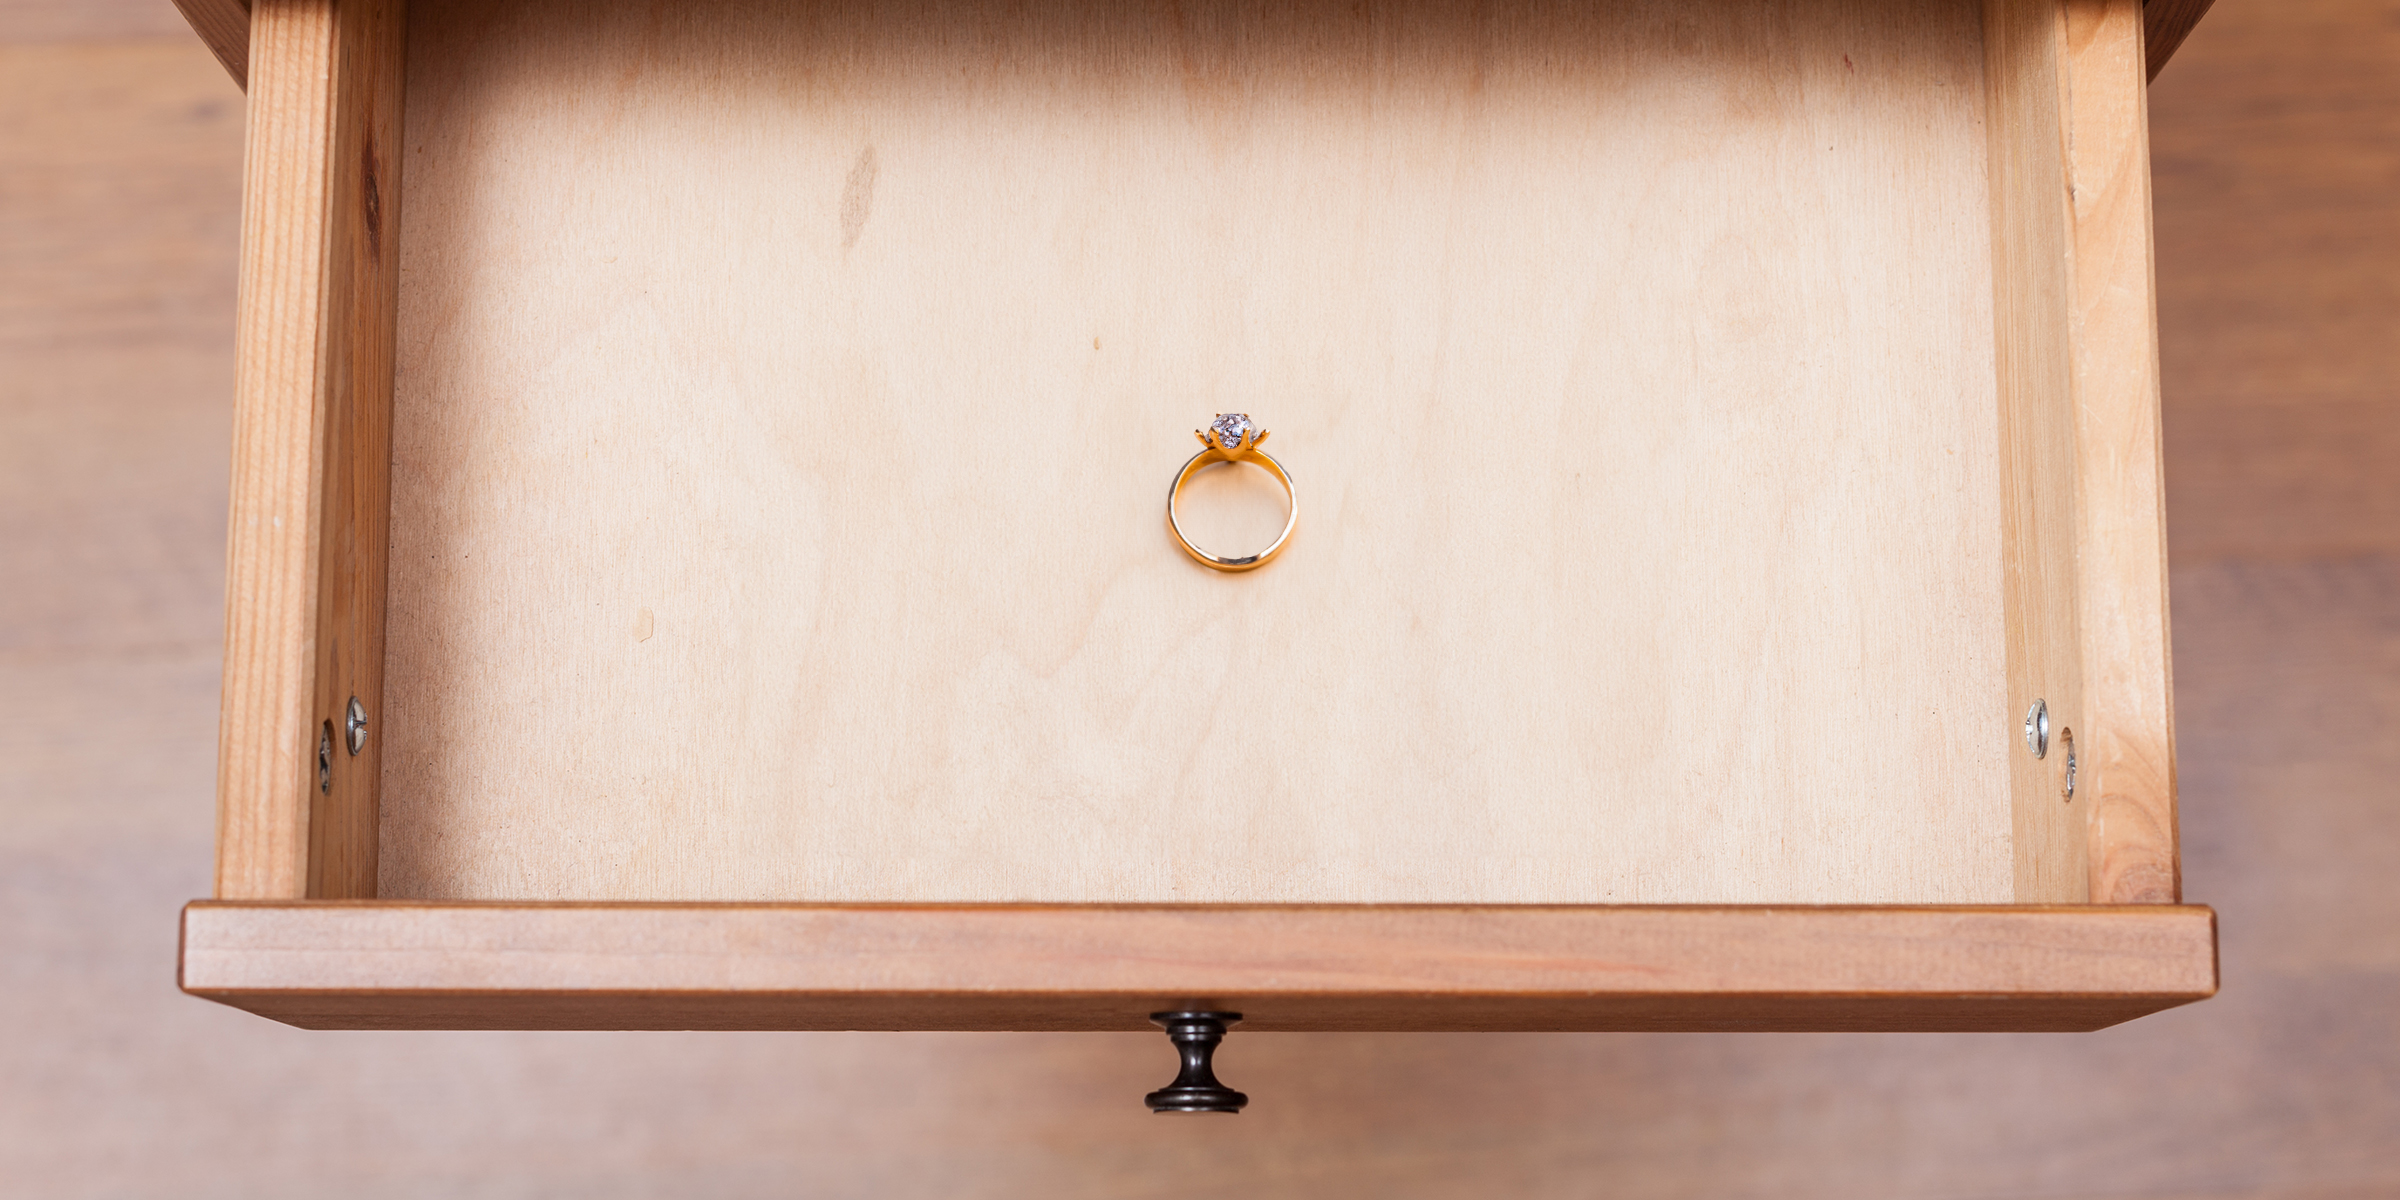 A diamond ring lying in an open drawer | Source: Shutterstock